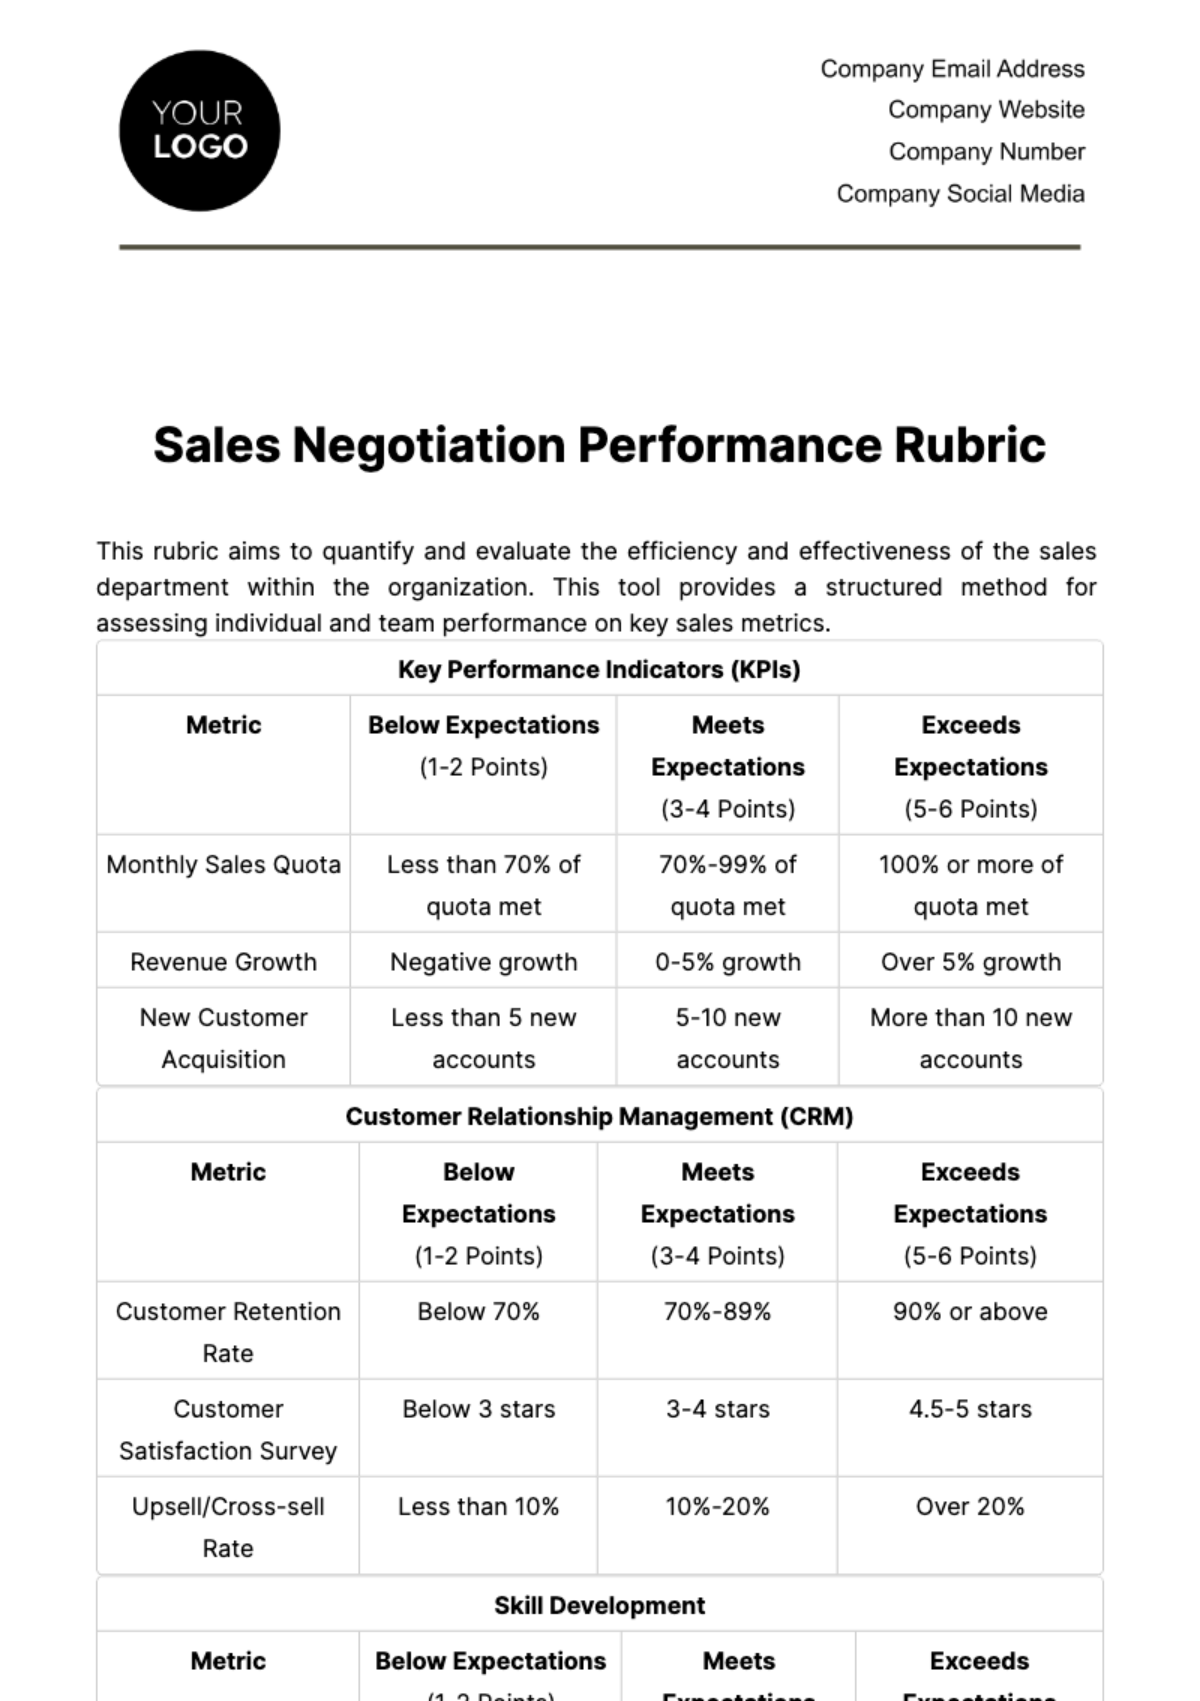 Sales Negotiation Performance Rubric Template